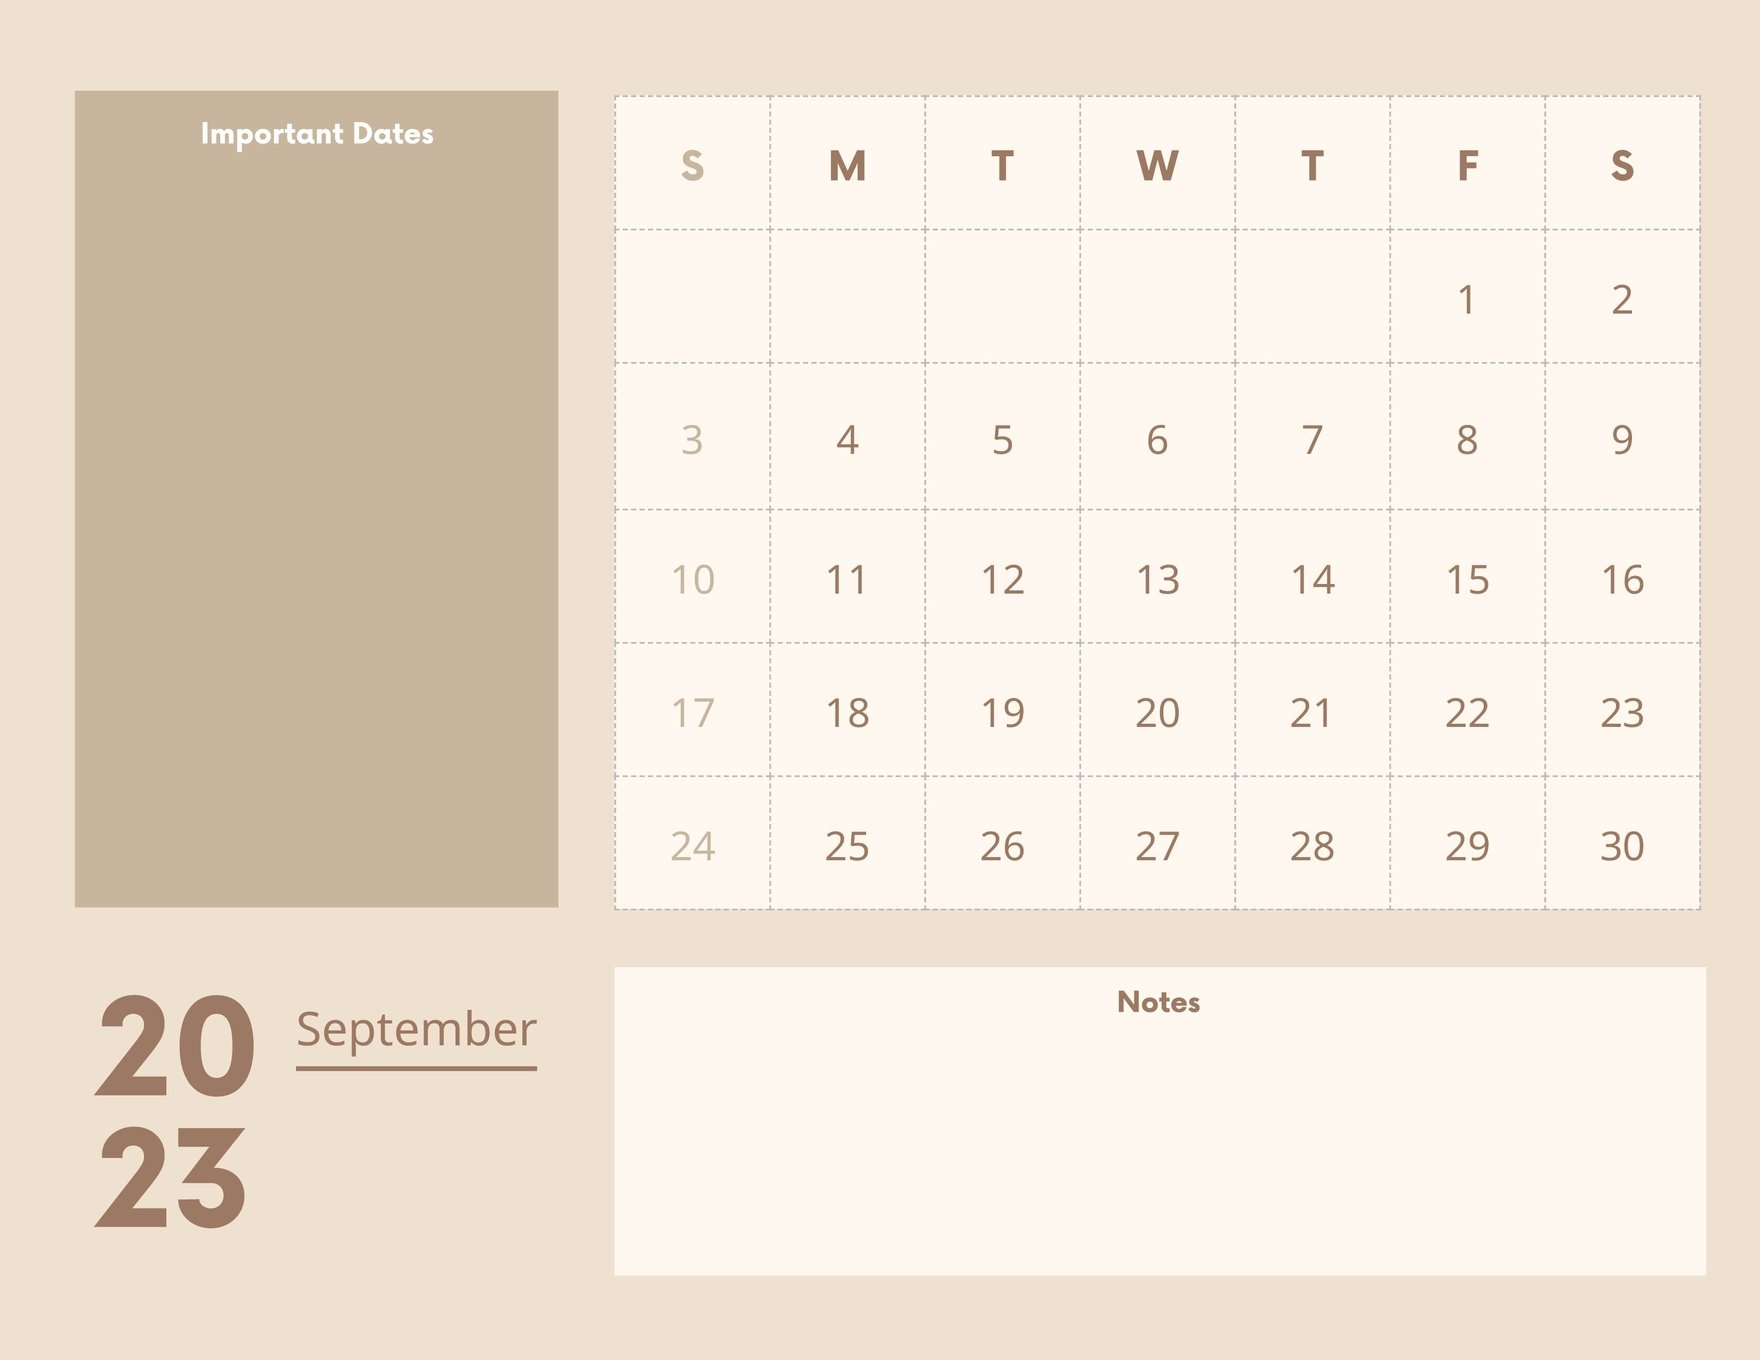 Blank September 2023 Calendar Template